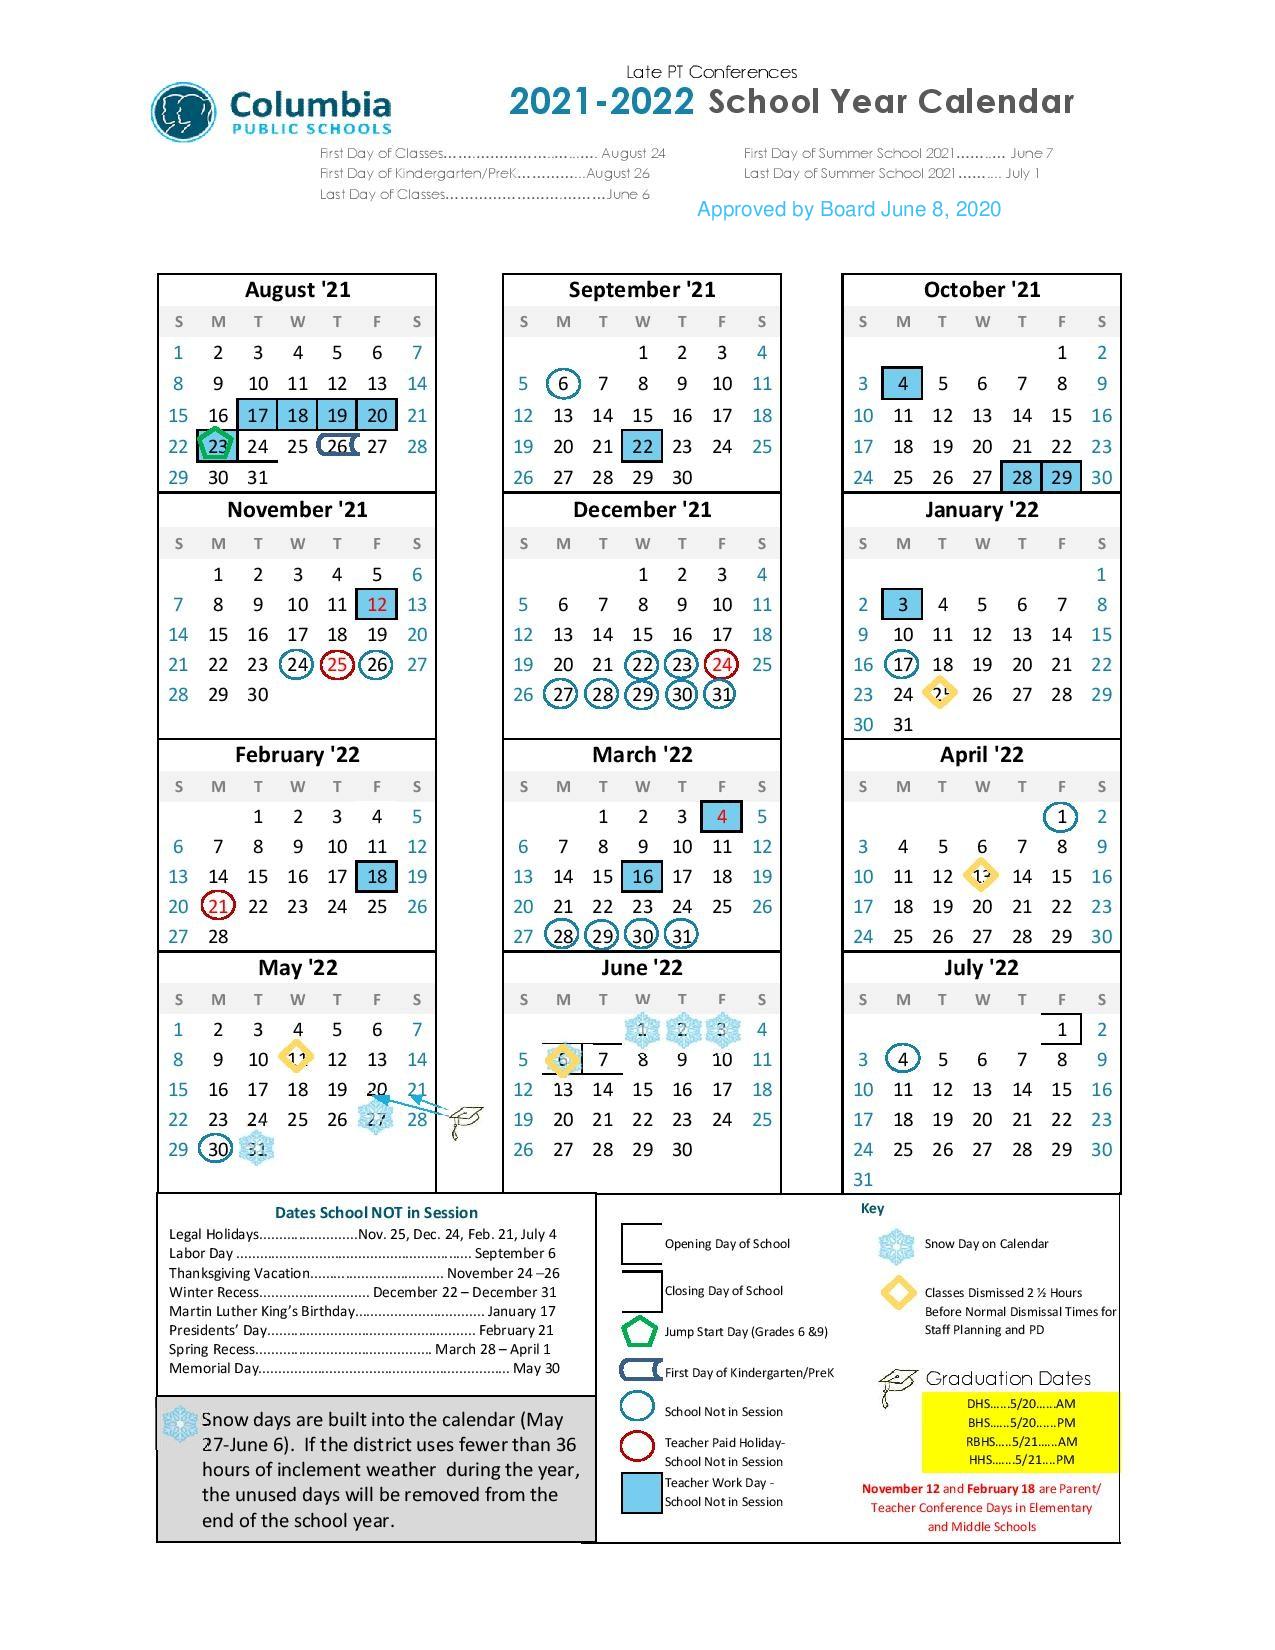 Columbia Public Schools Calendar 2021 2022 In Pdf